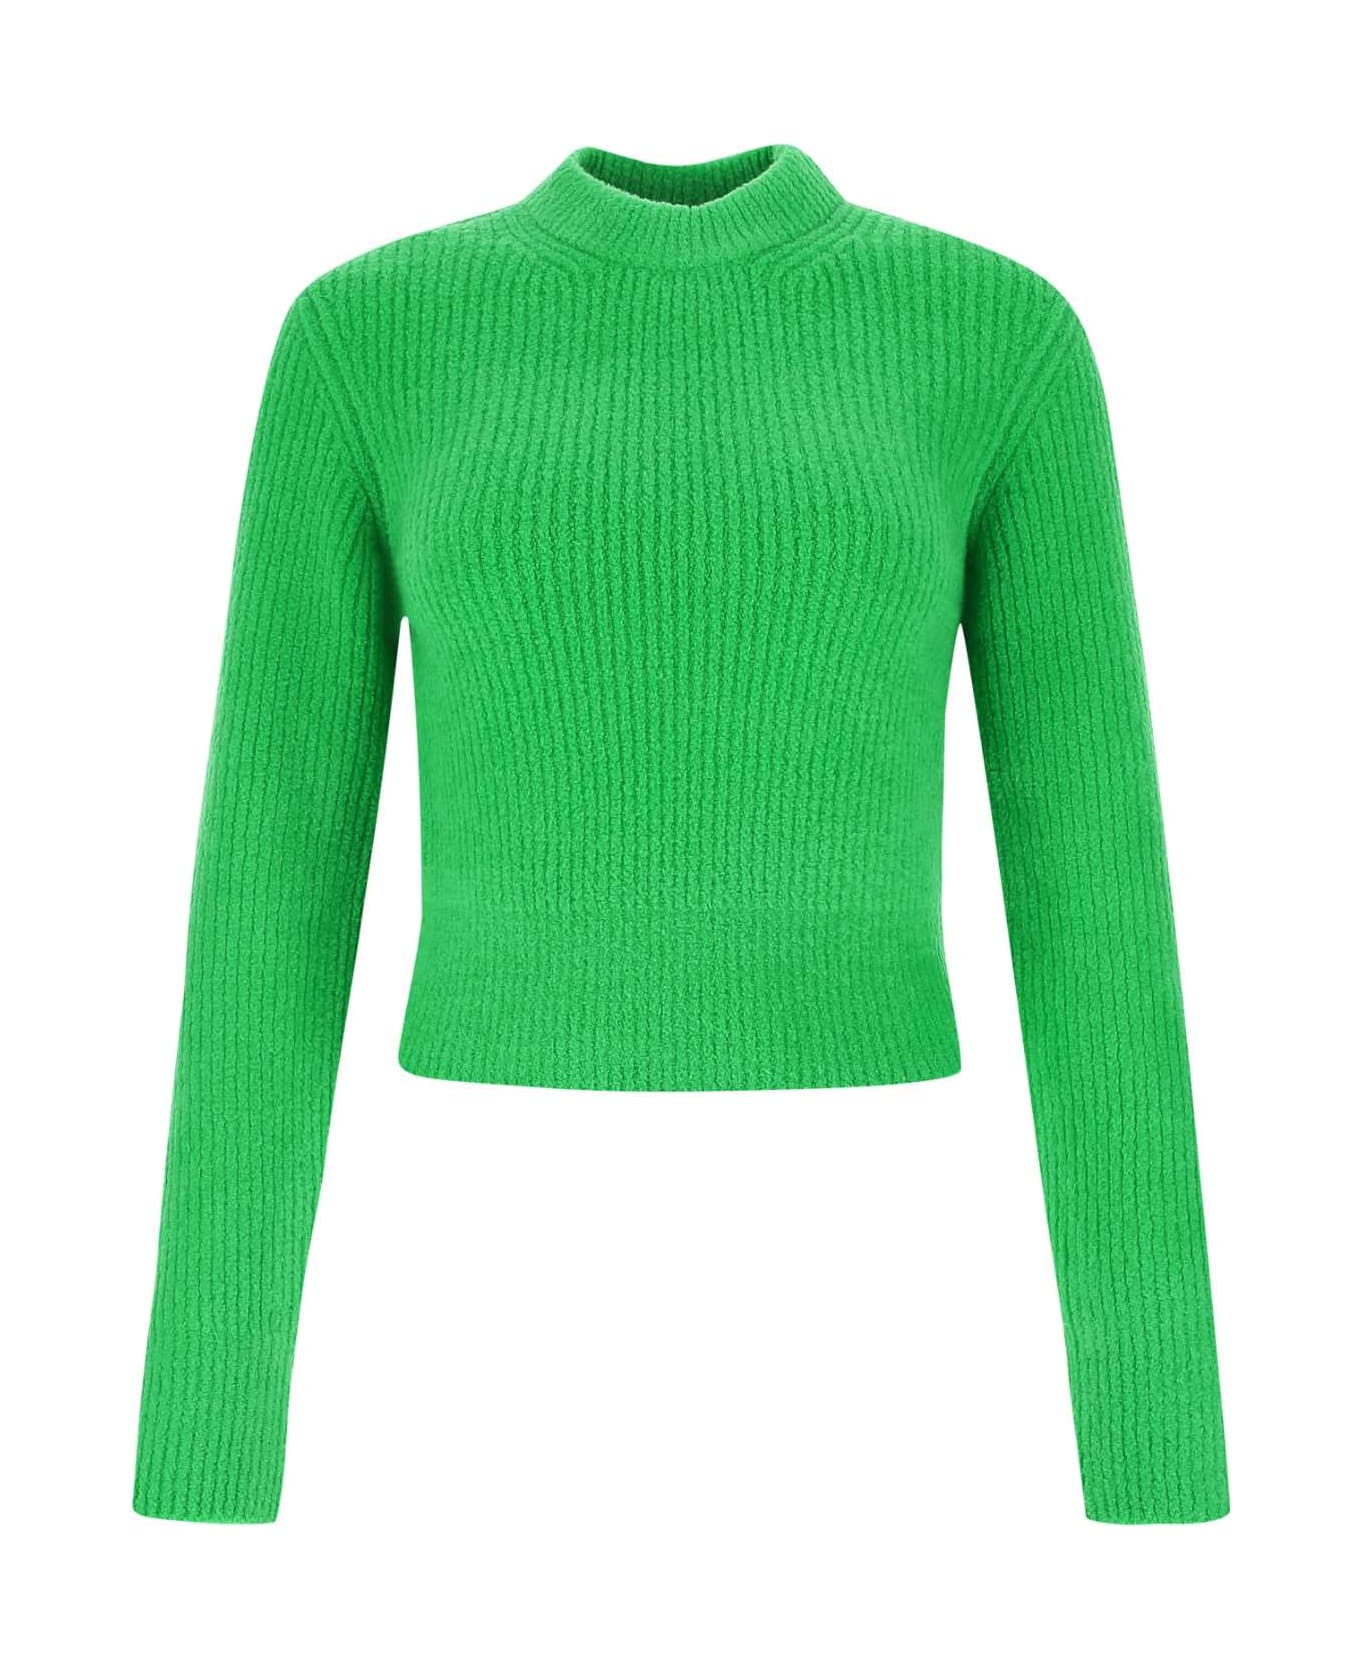 T by Alexander Wang Green Stretch Wool Blend Sweater - 310